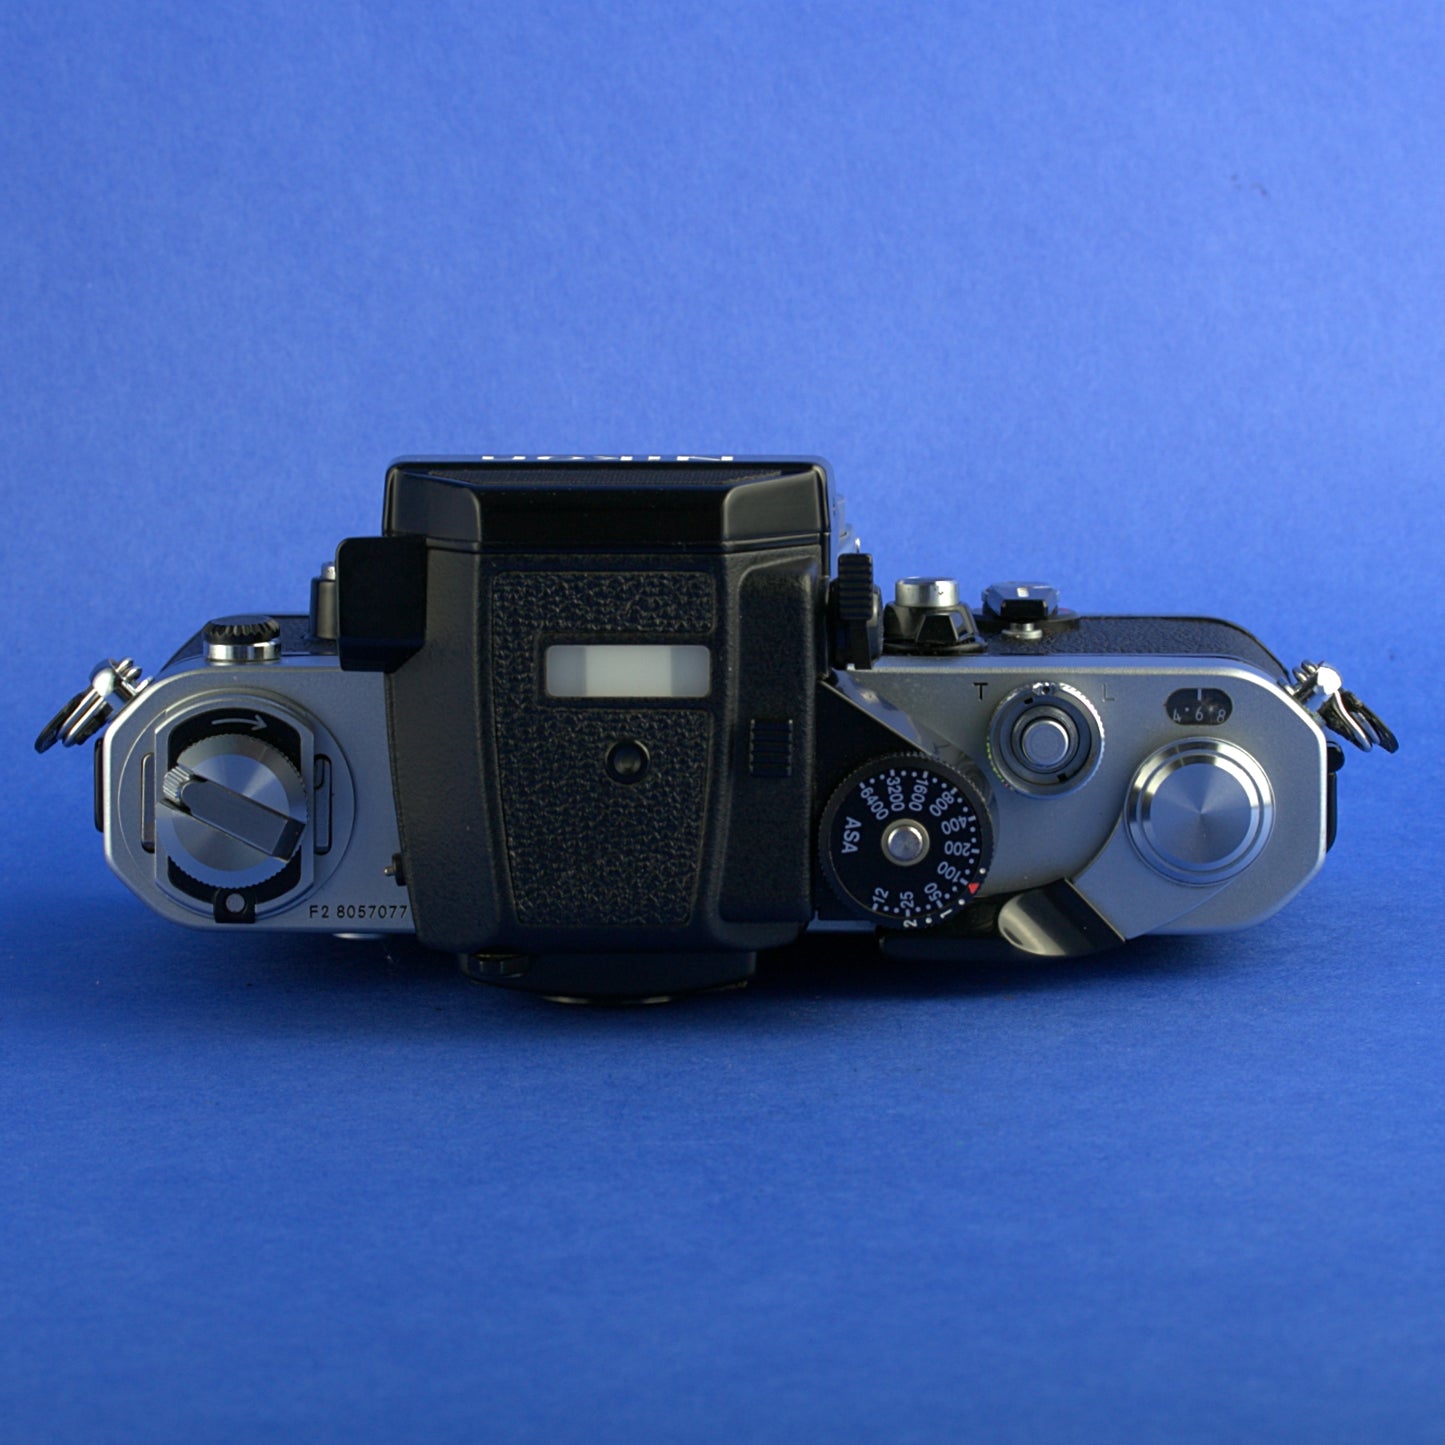 Stunning Nikon F2AS Film Camera Body Late Serial Near Mint Condition